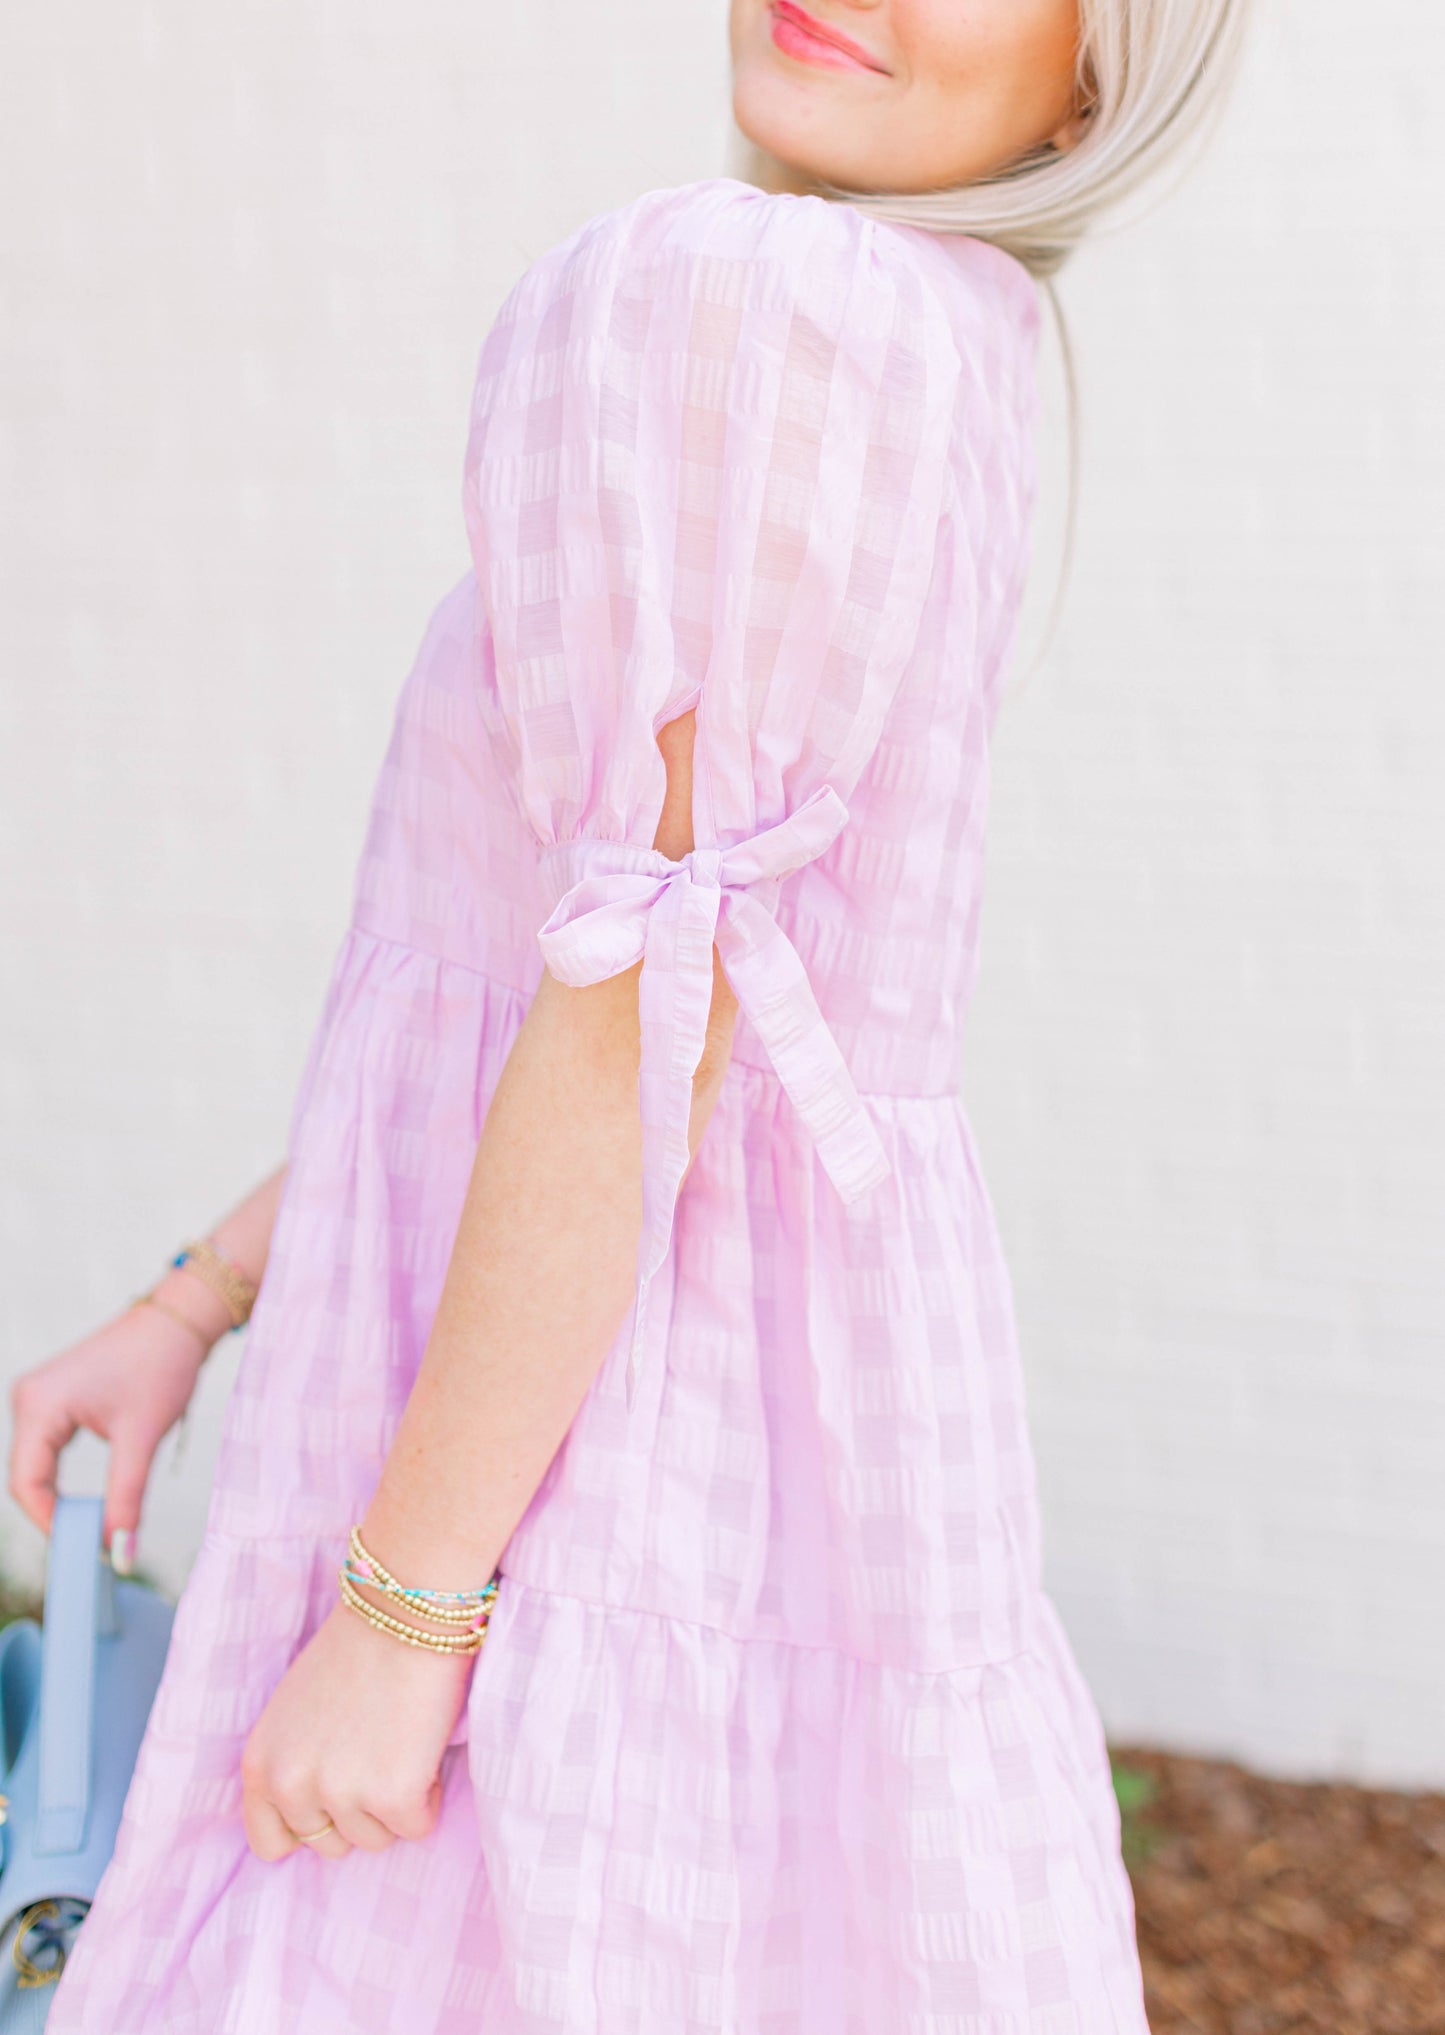 Picnic Perfect Baby Dress - Pink